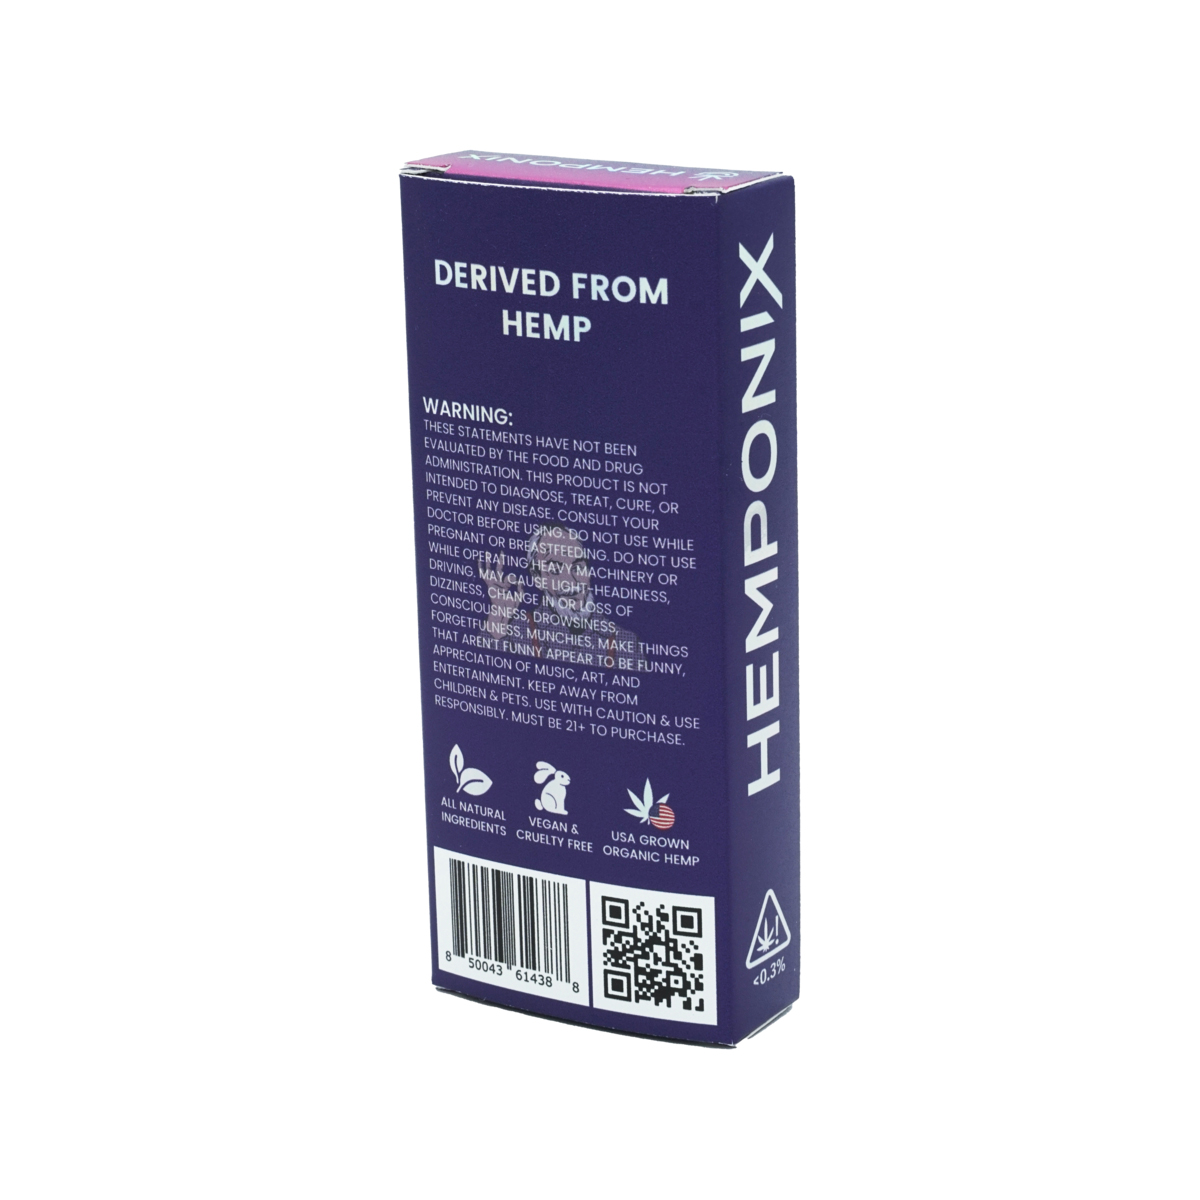 Hemponix-Granddaddy-Purple-HHC-Vape-Facts